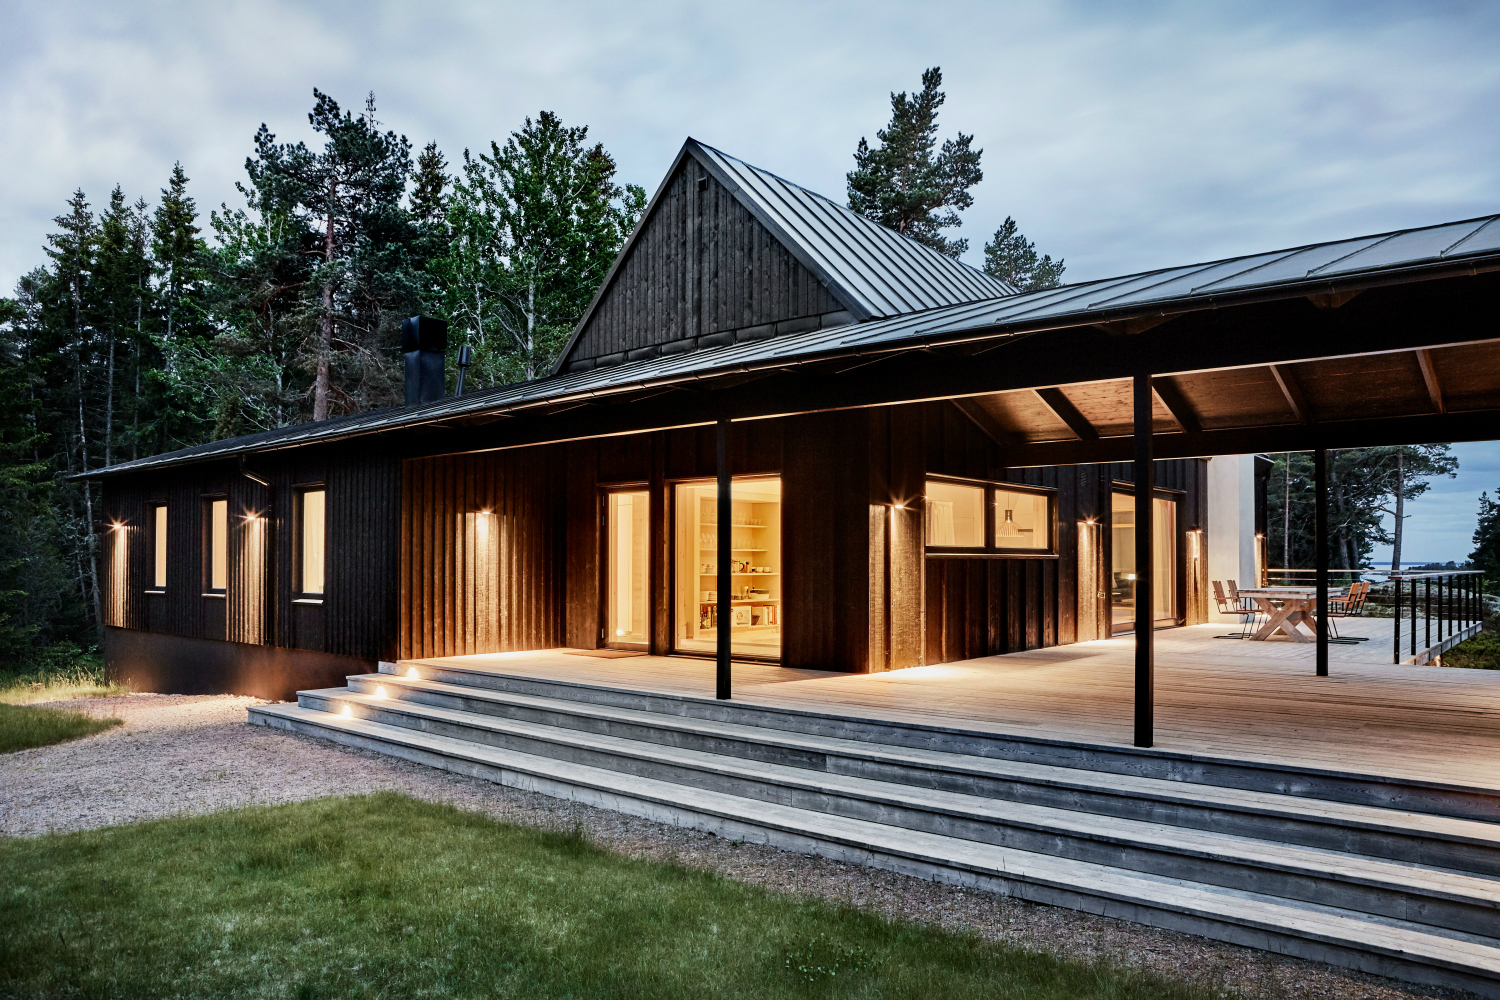 archipelago sommarhus swedish cabin kod arkitekter summerhouse 5